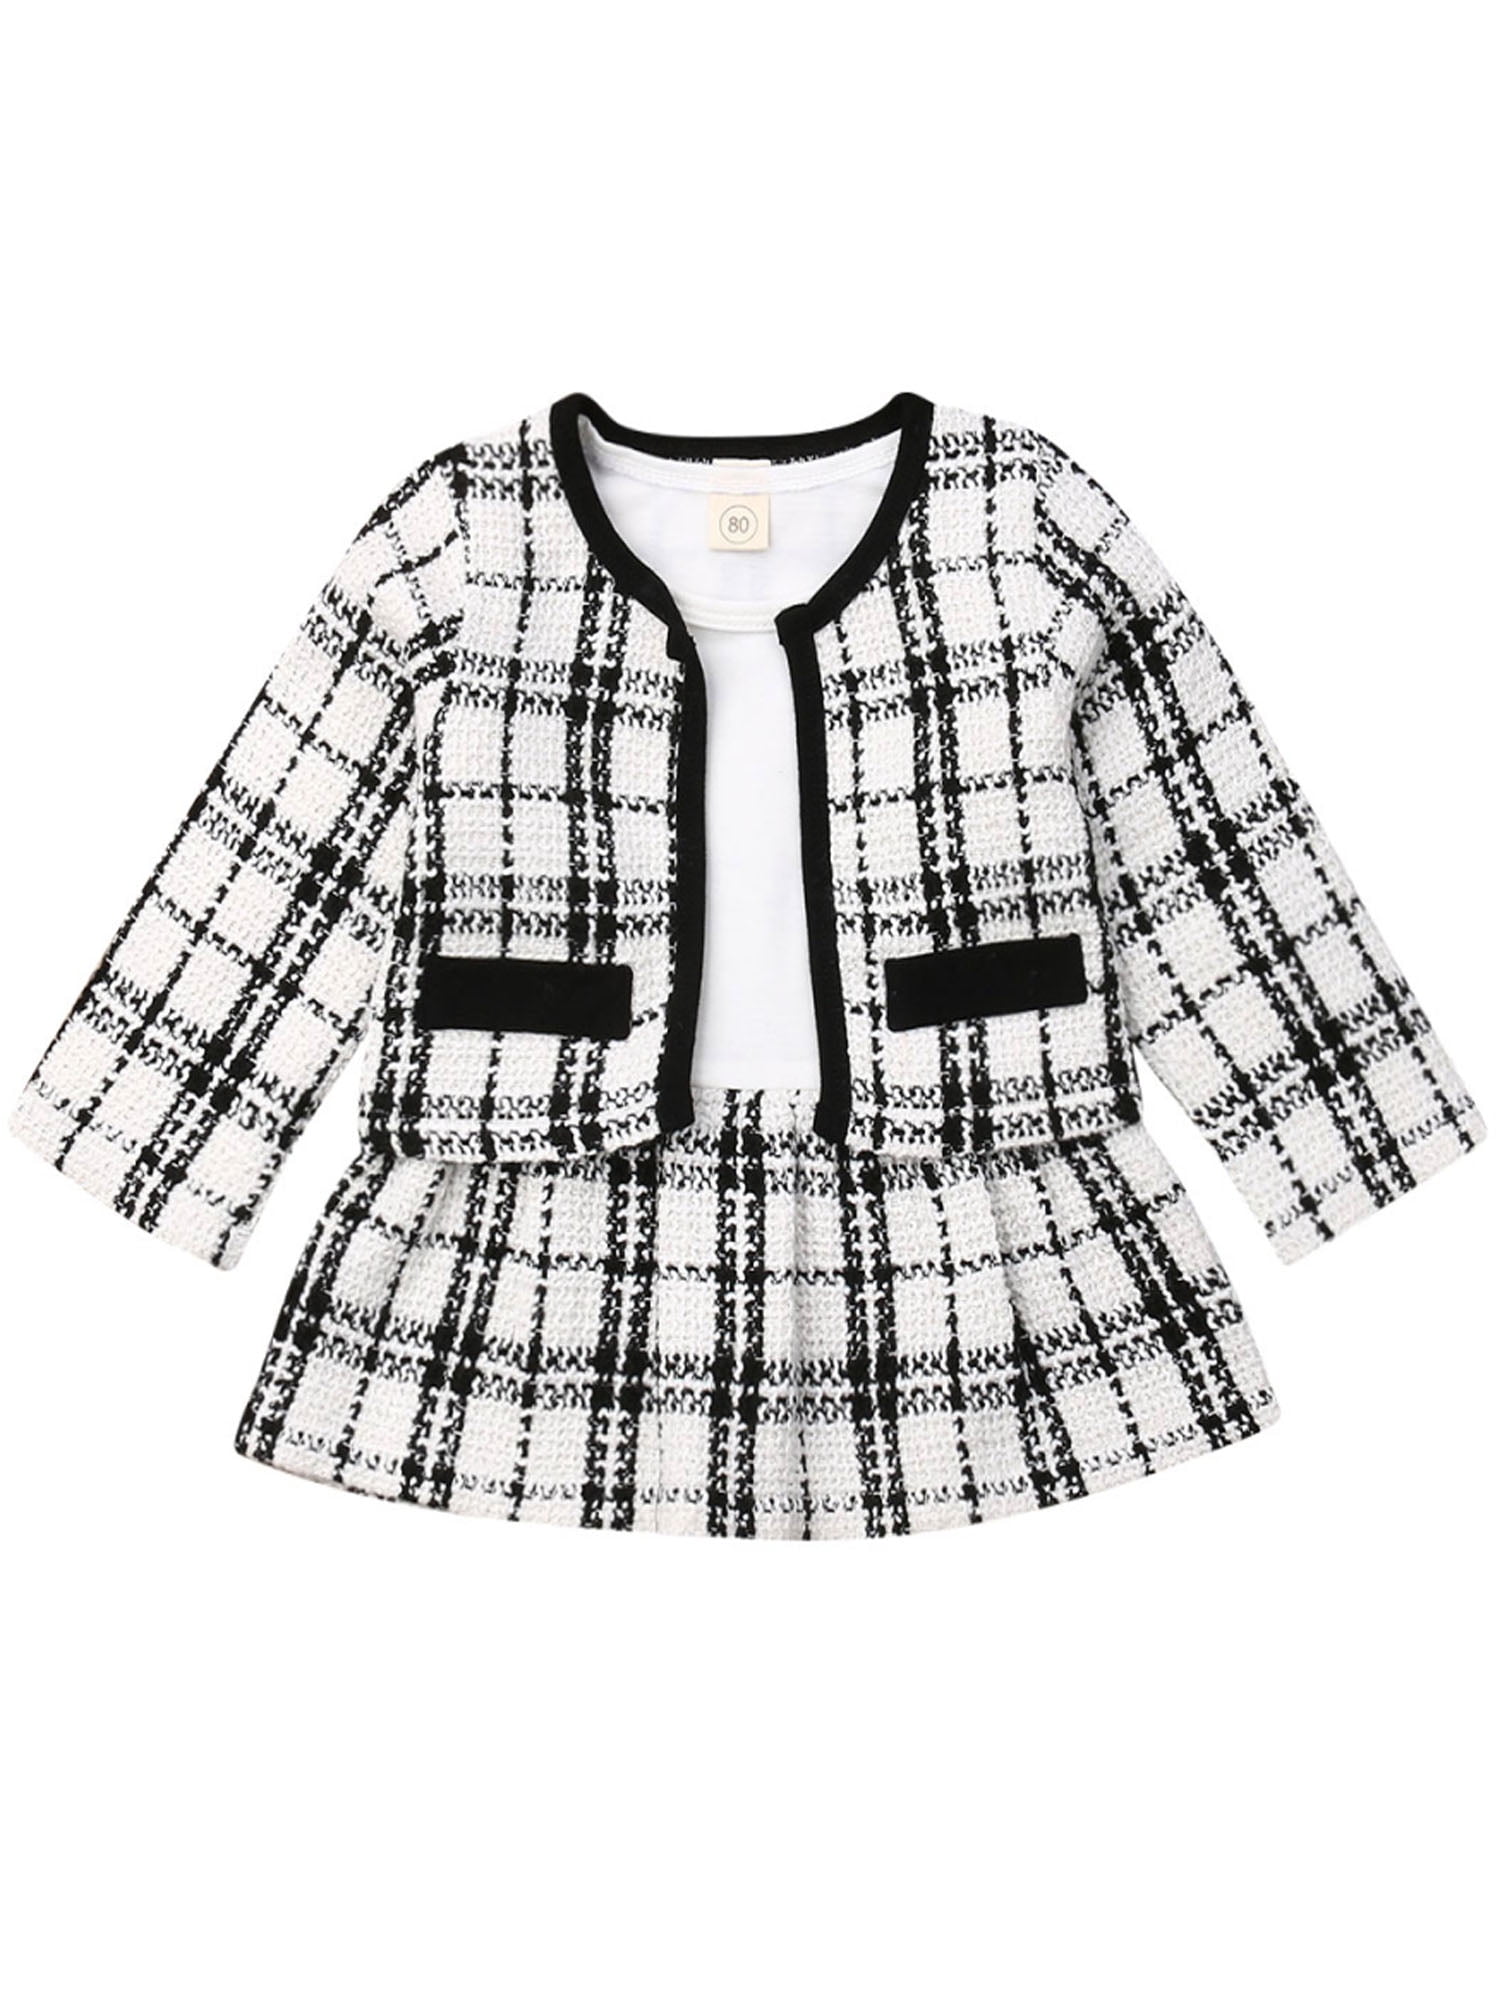 Long Sleeve One-Piece Dress Fall Spring Clothes Set Amberetech Toddler Baby Girls 2PCS Princess Skirt Set Plaid Jacket Coat